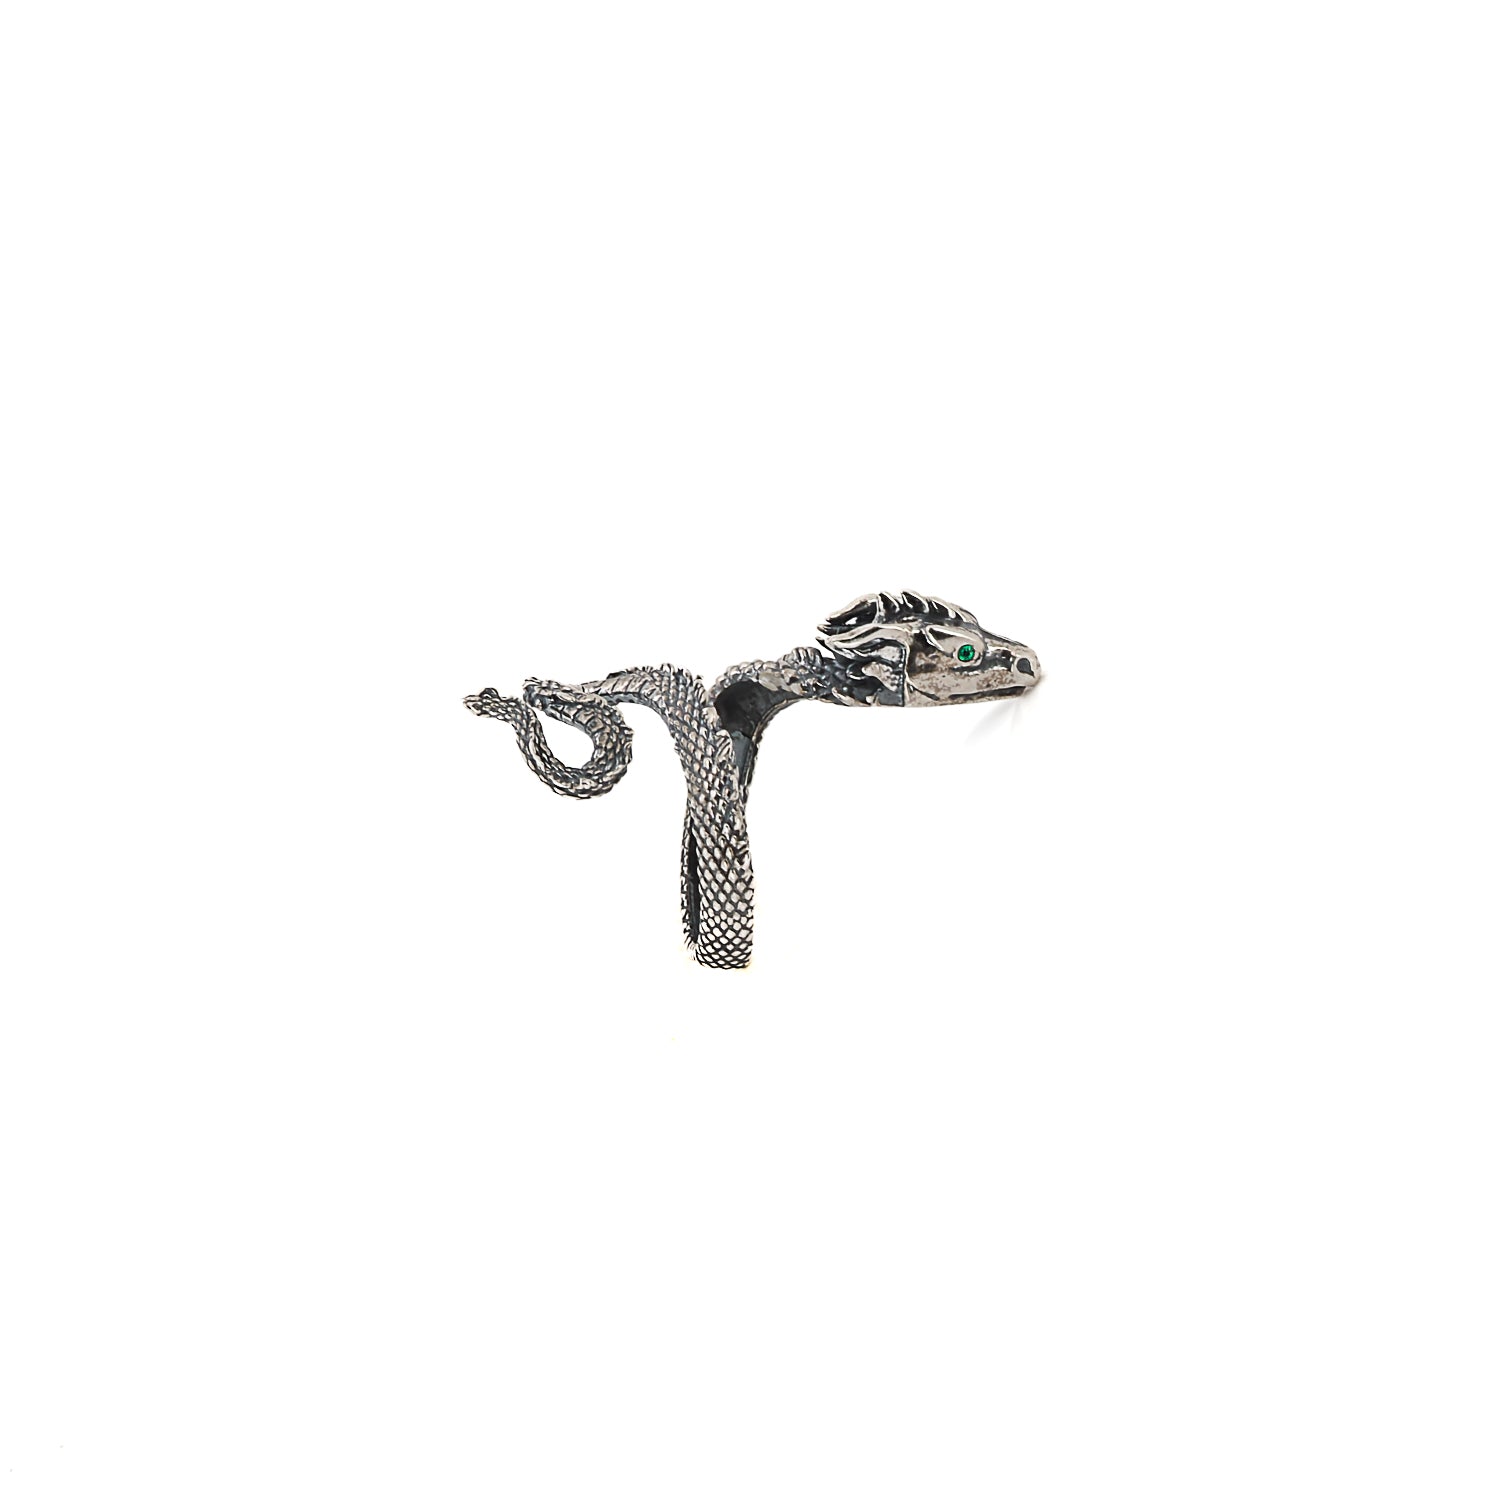 Unique Sterling Silver Snake Ring - Adjustable Size